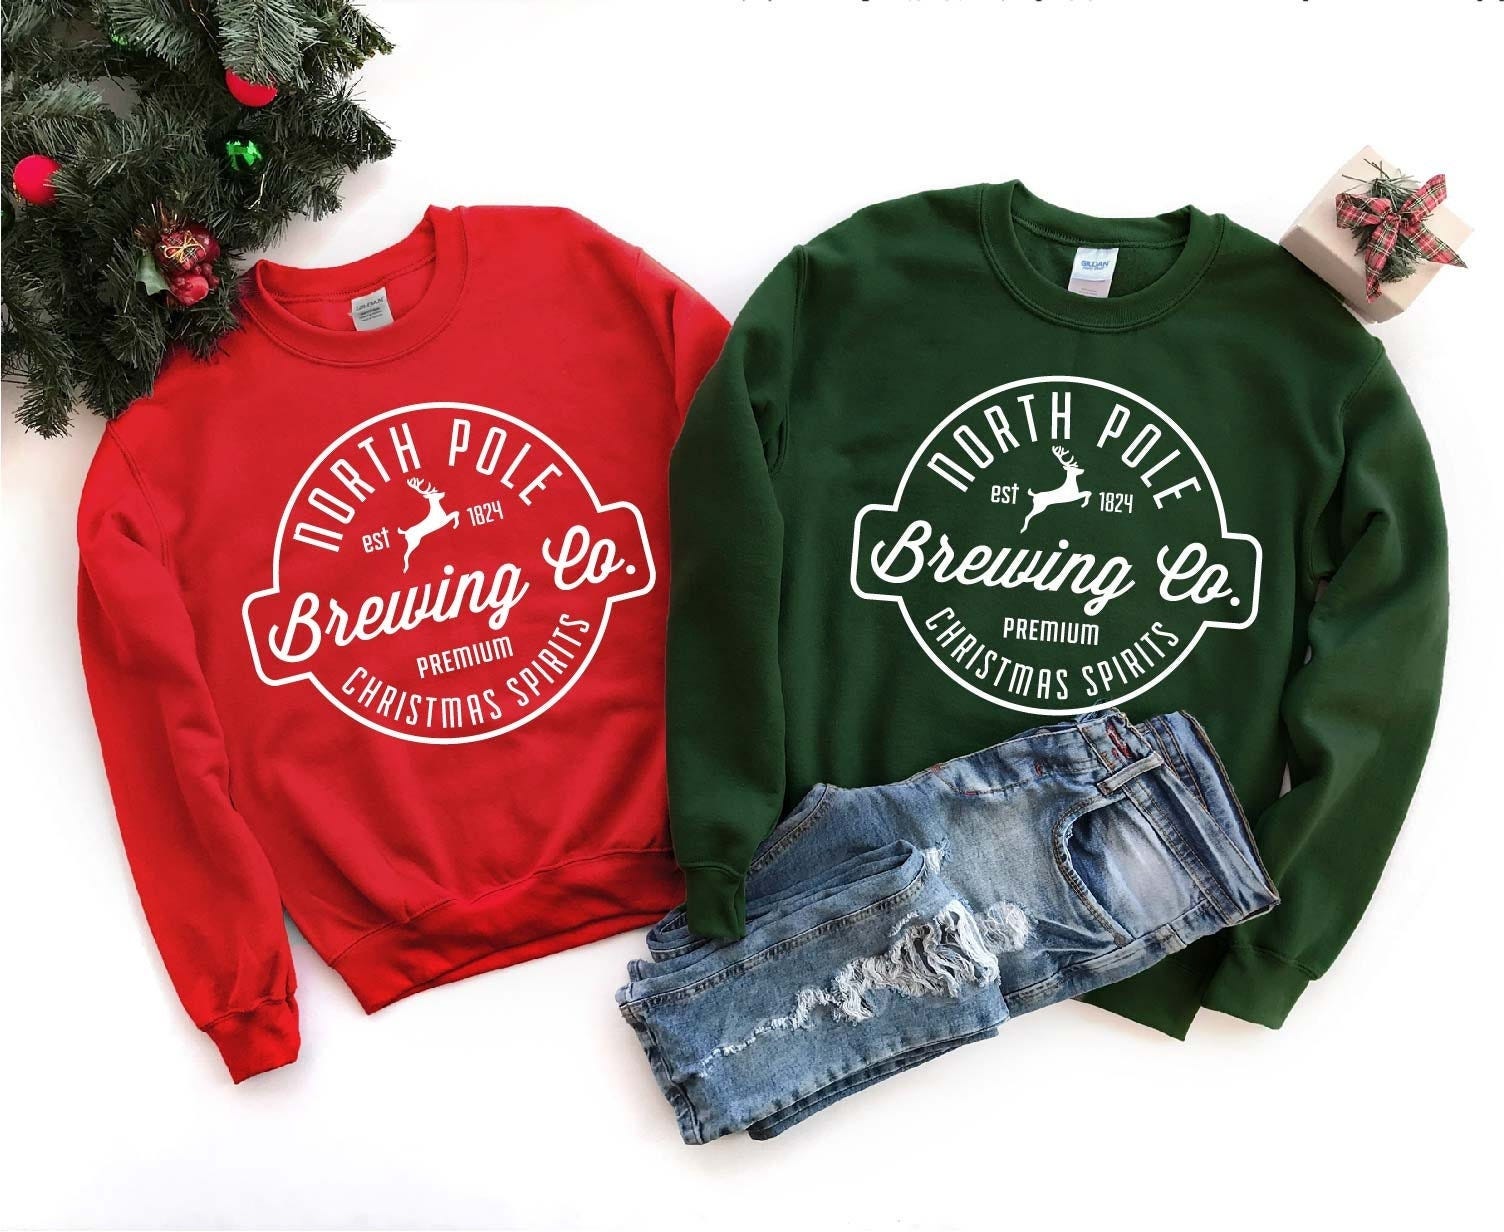 North Pole Brewing Co Sweatshirt, Christmas Sweatshirt, Premium Christmas Spirit, Brewing Co Sweatshirt, North Pole sweater, Brewing Co